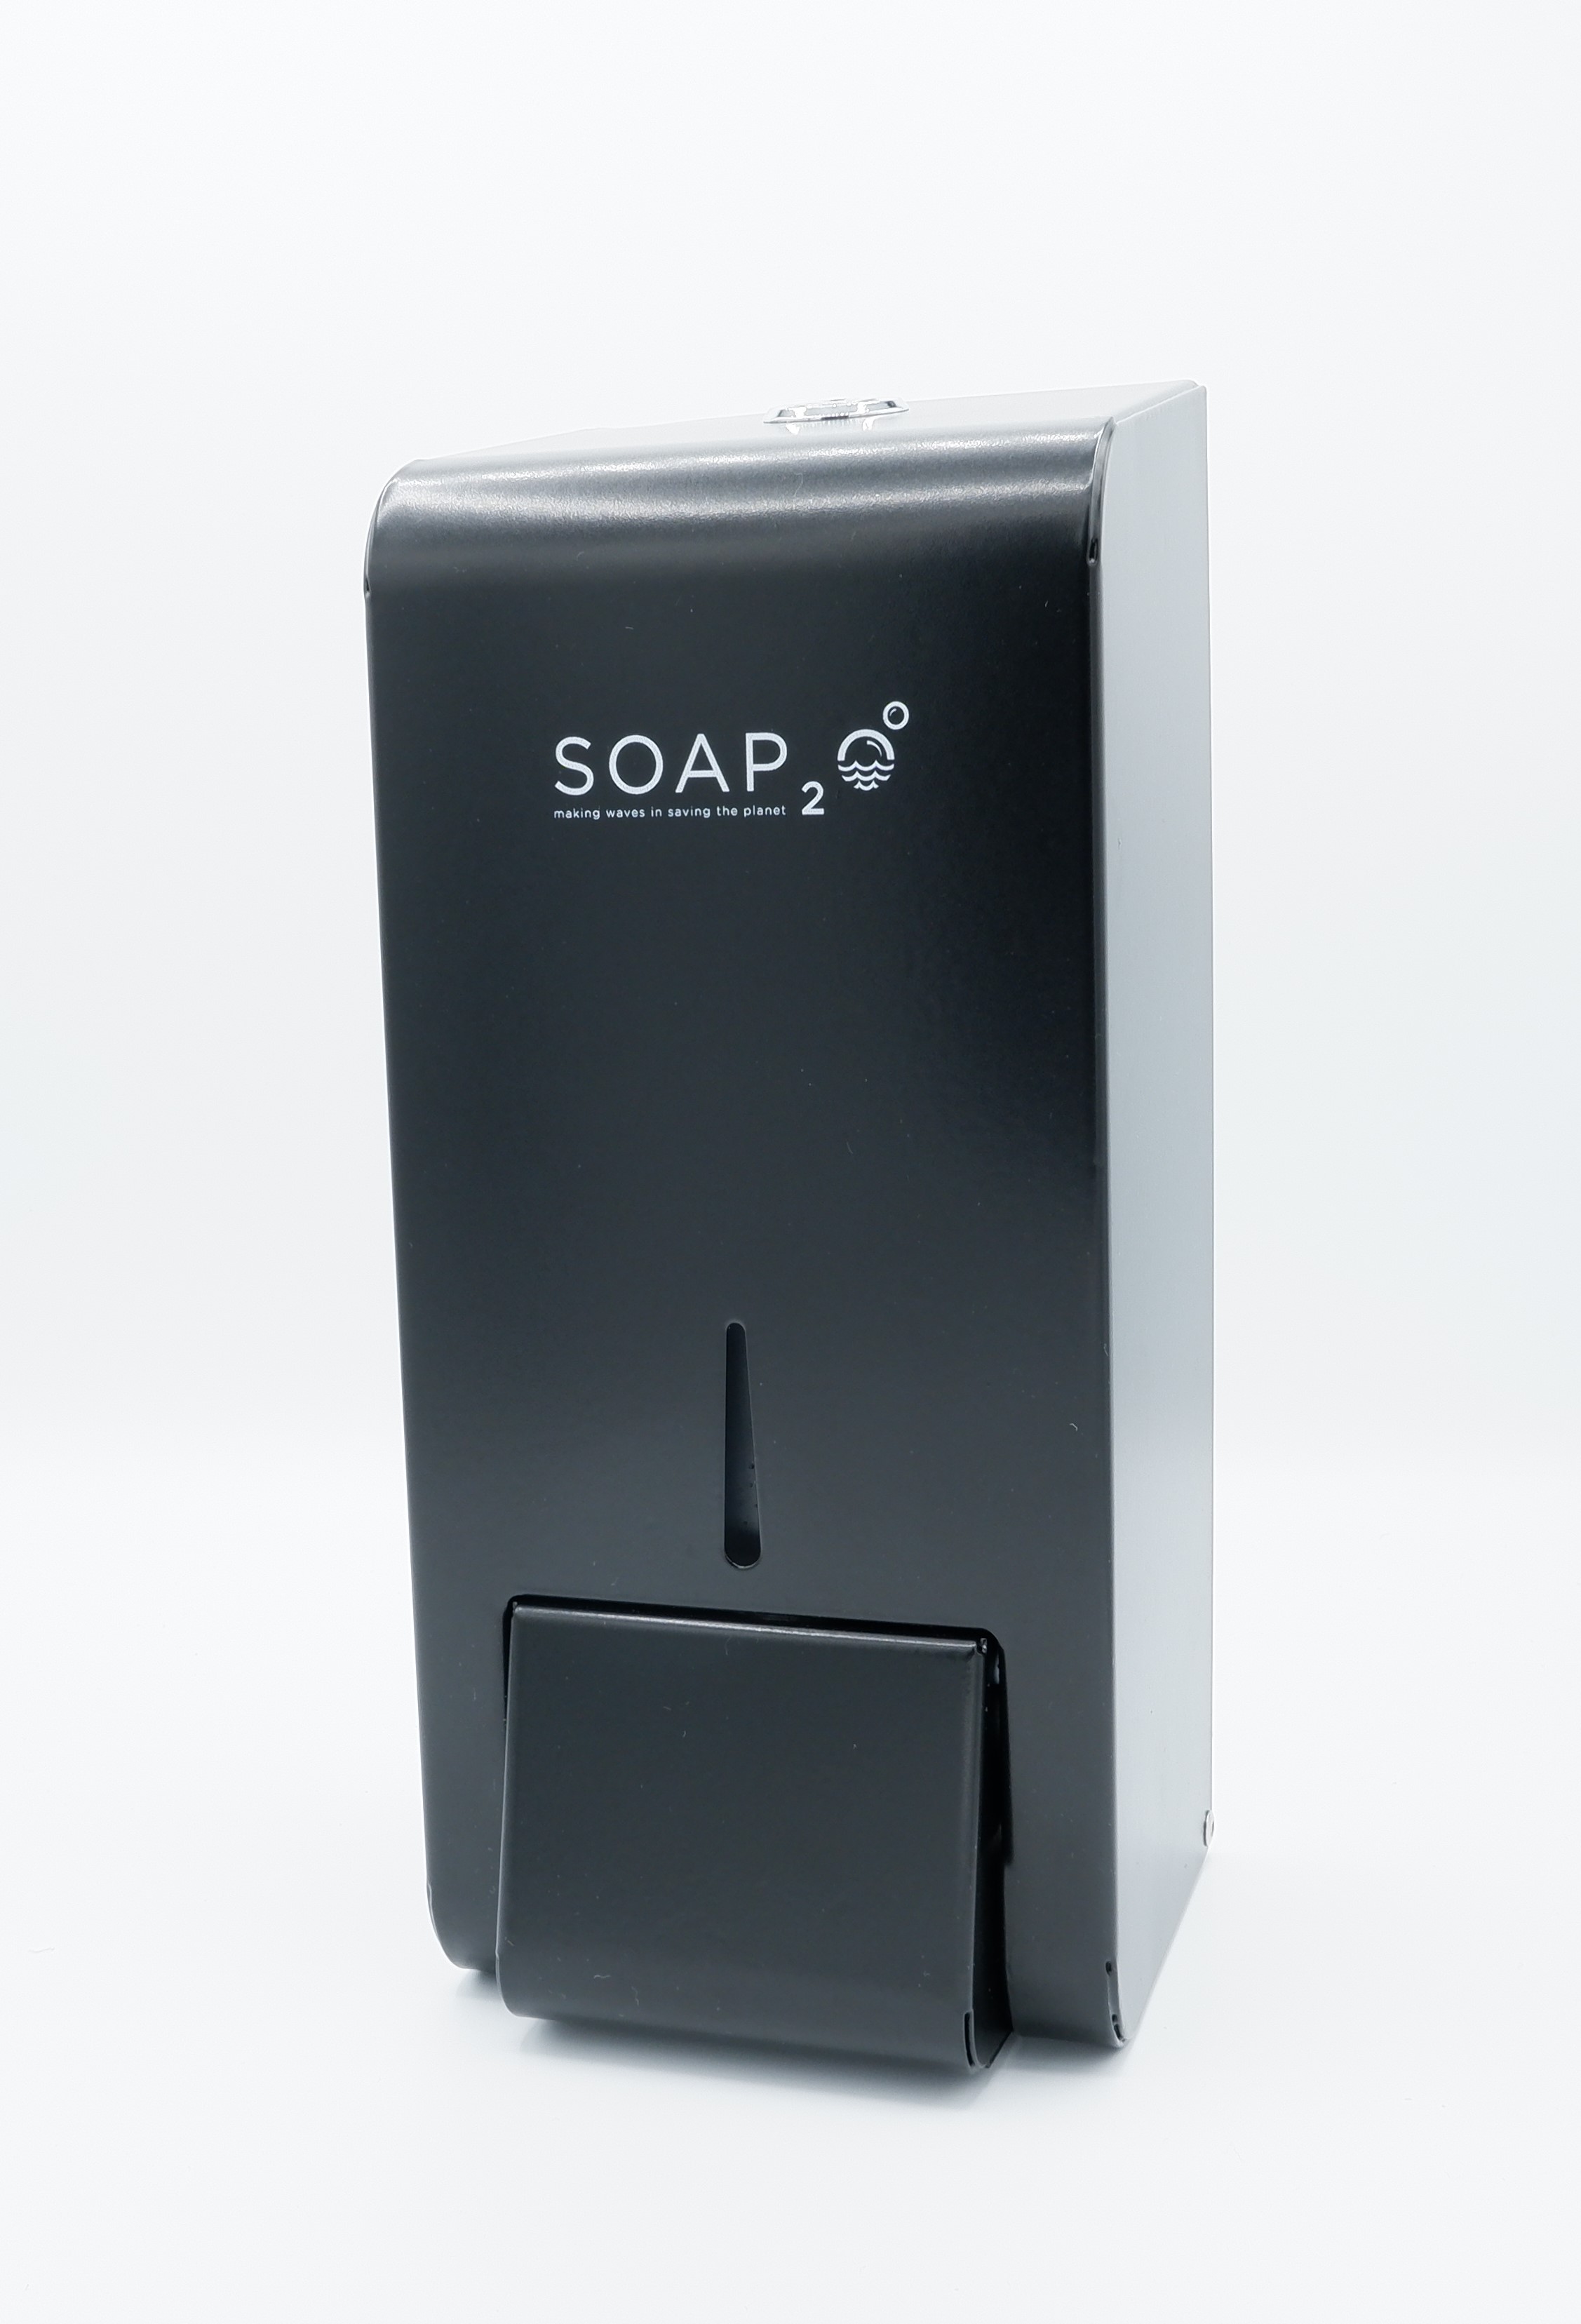 Soap2o Stainless Steel Foam Soap Dispenser